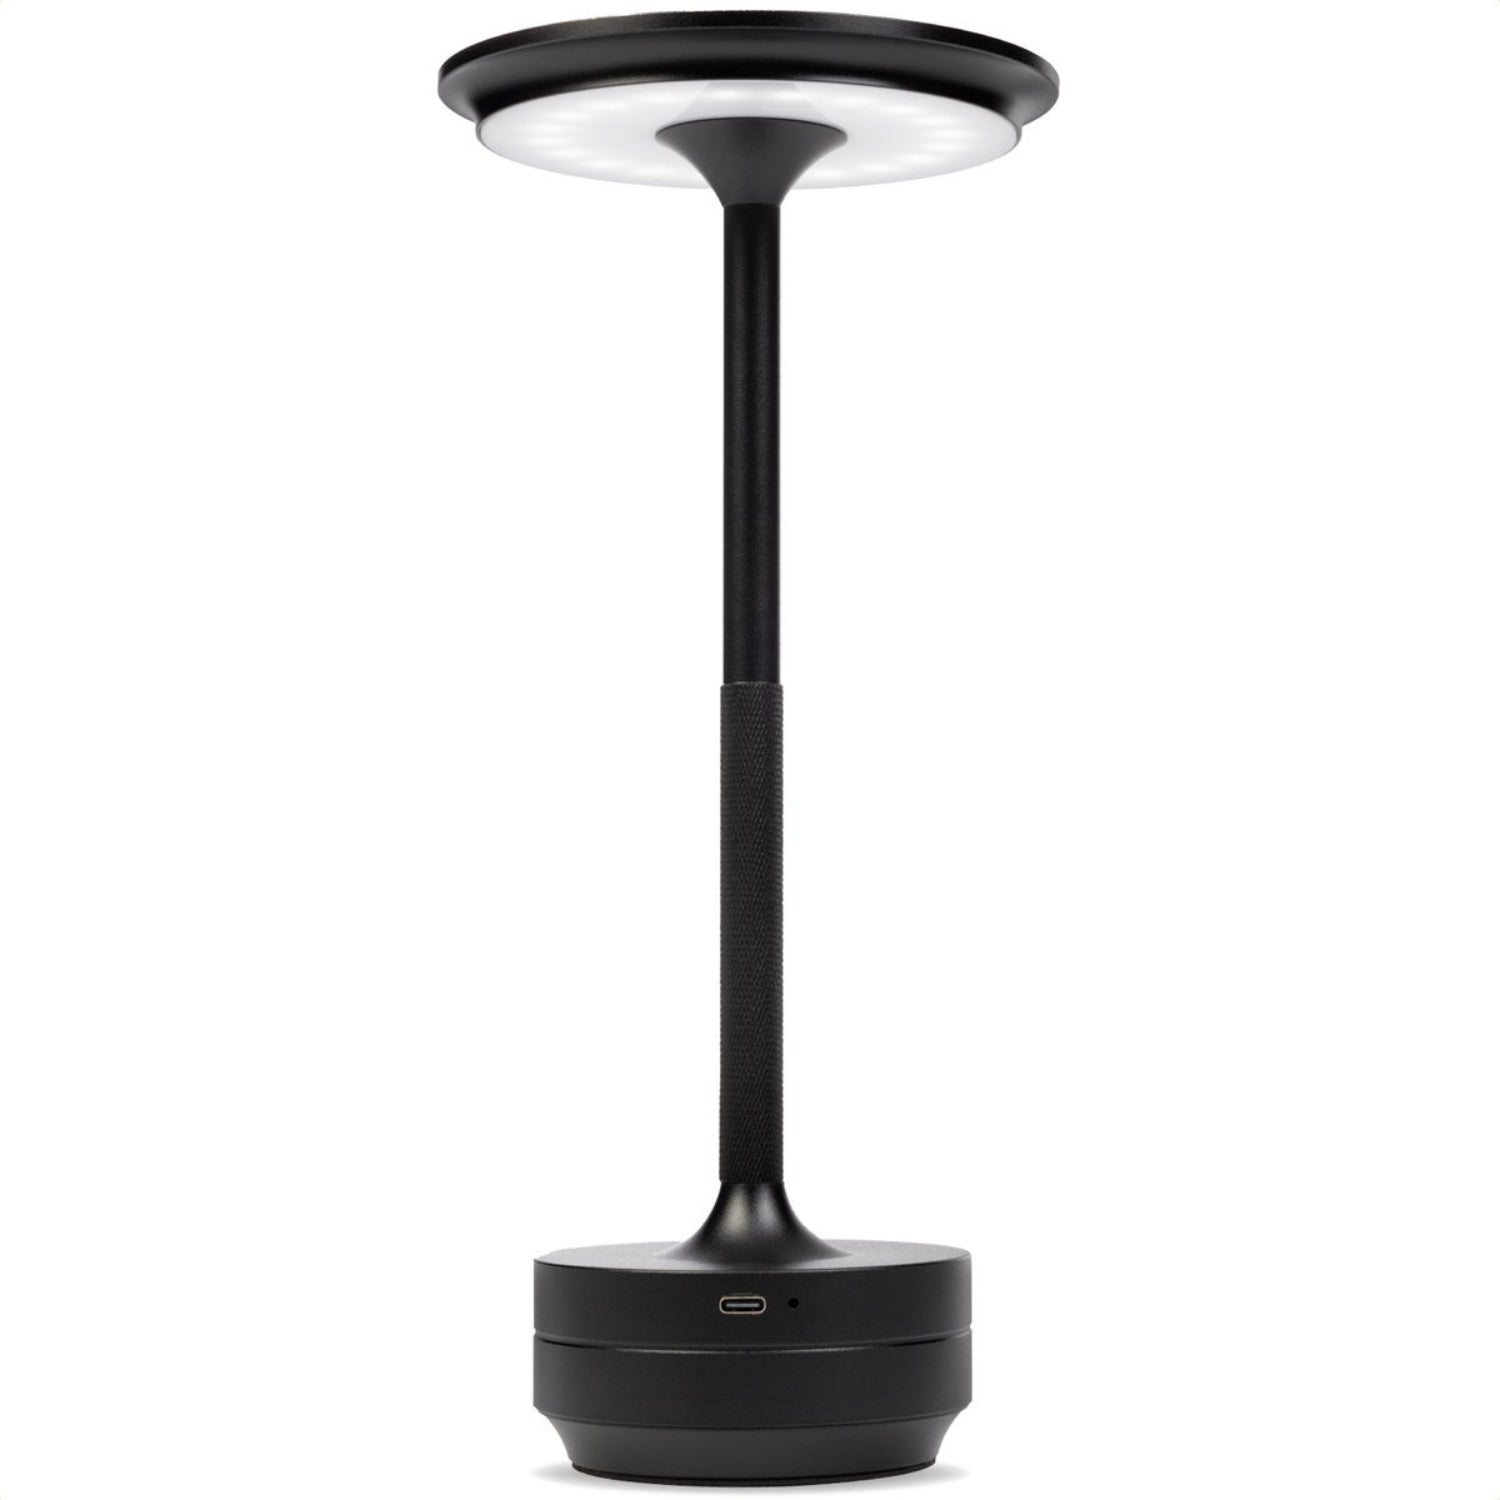 Goliving Horizon Tafellamp Op Accu - Oplaadbaar en Dimbaar - Spatwaterbestendig - Past in ieder interieur - Energiezuinig - Hoogte 27 cm - Zwart